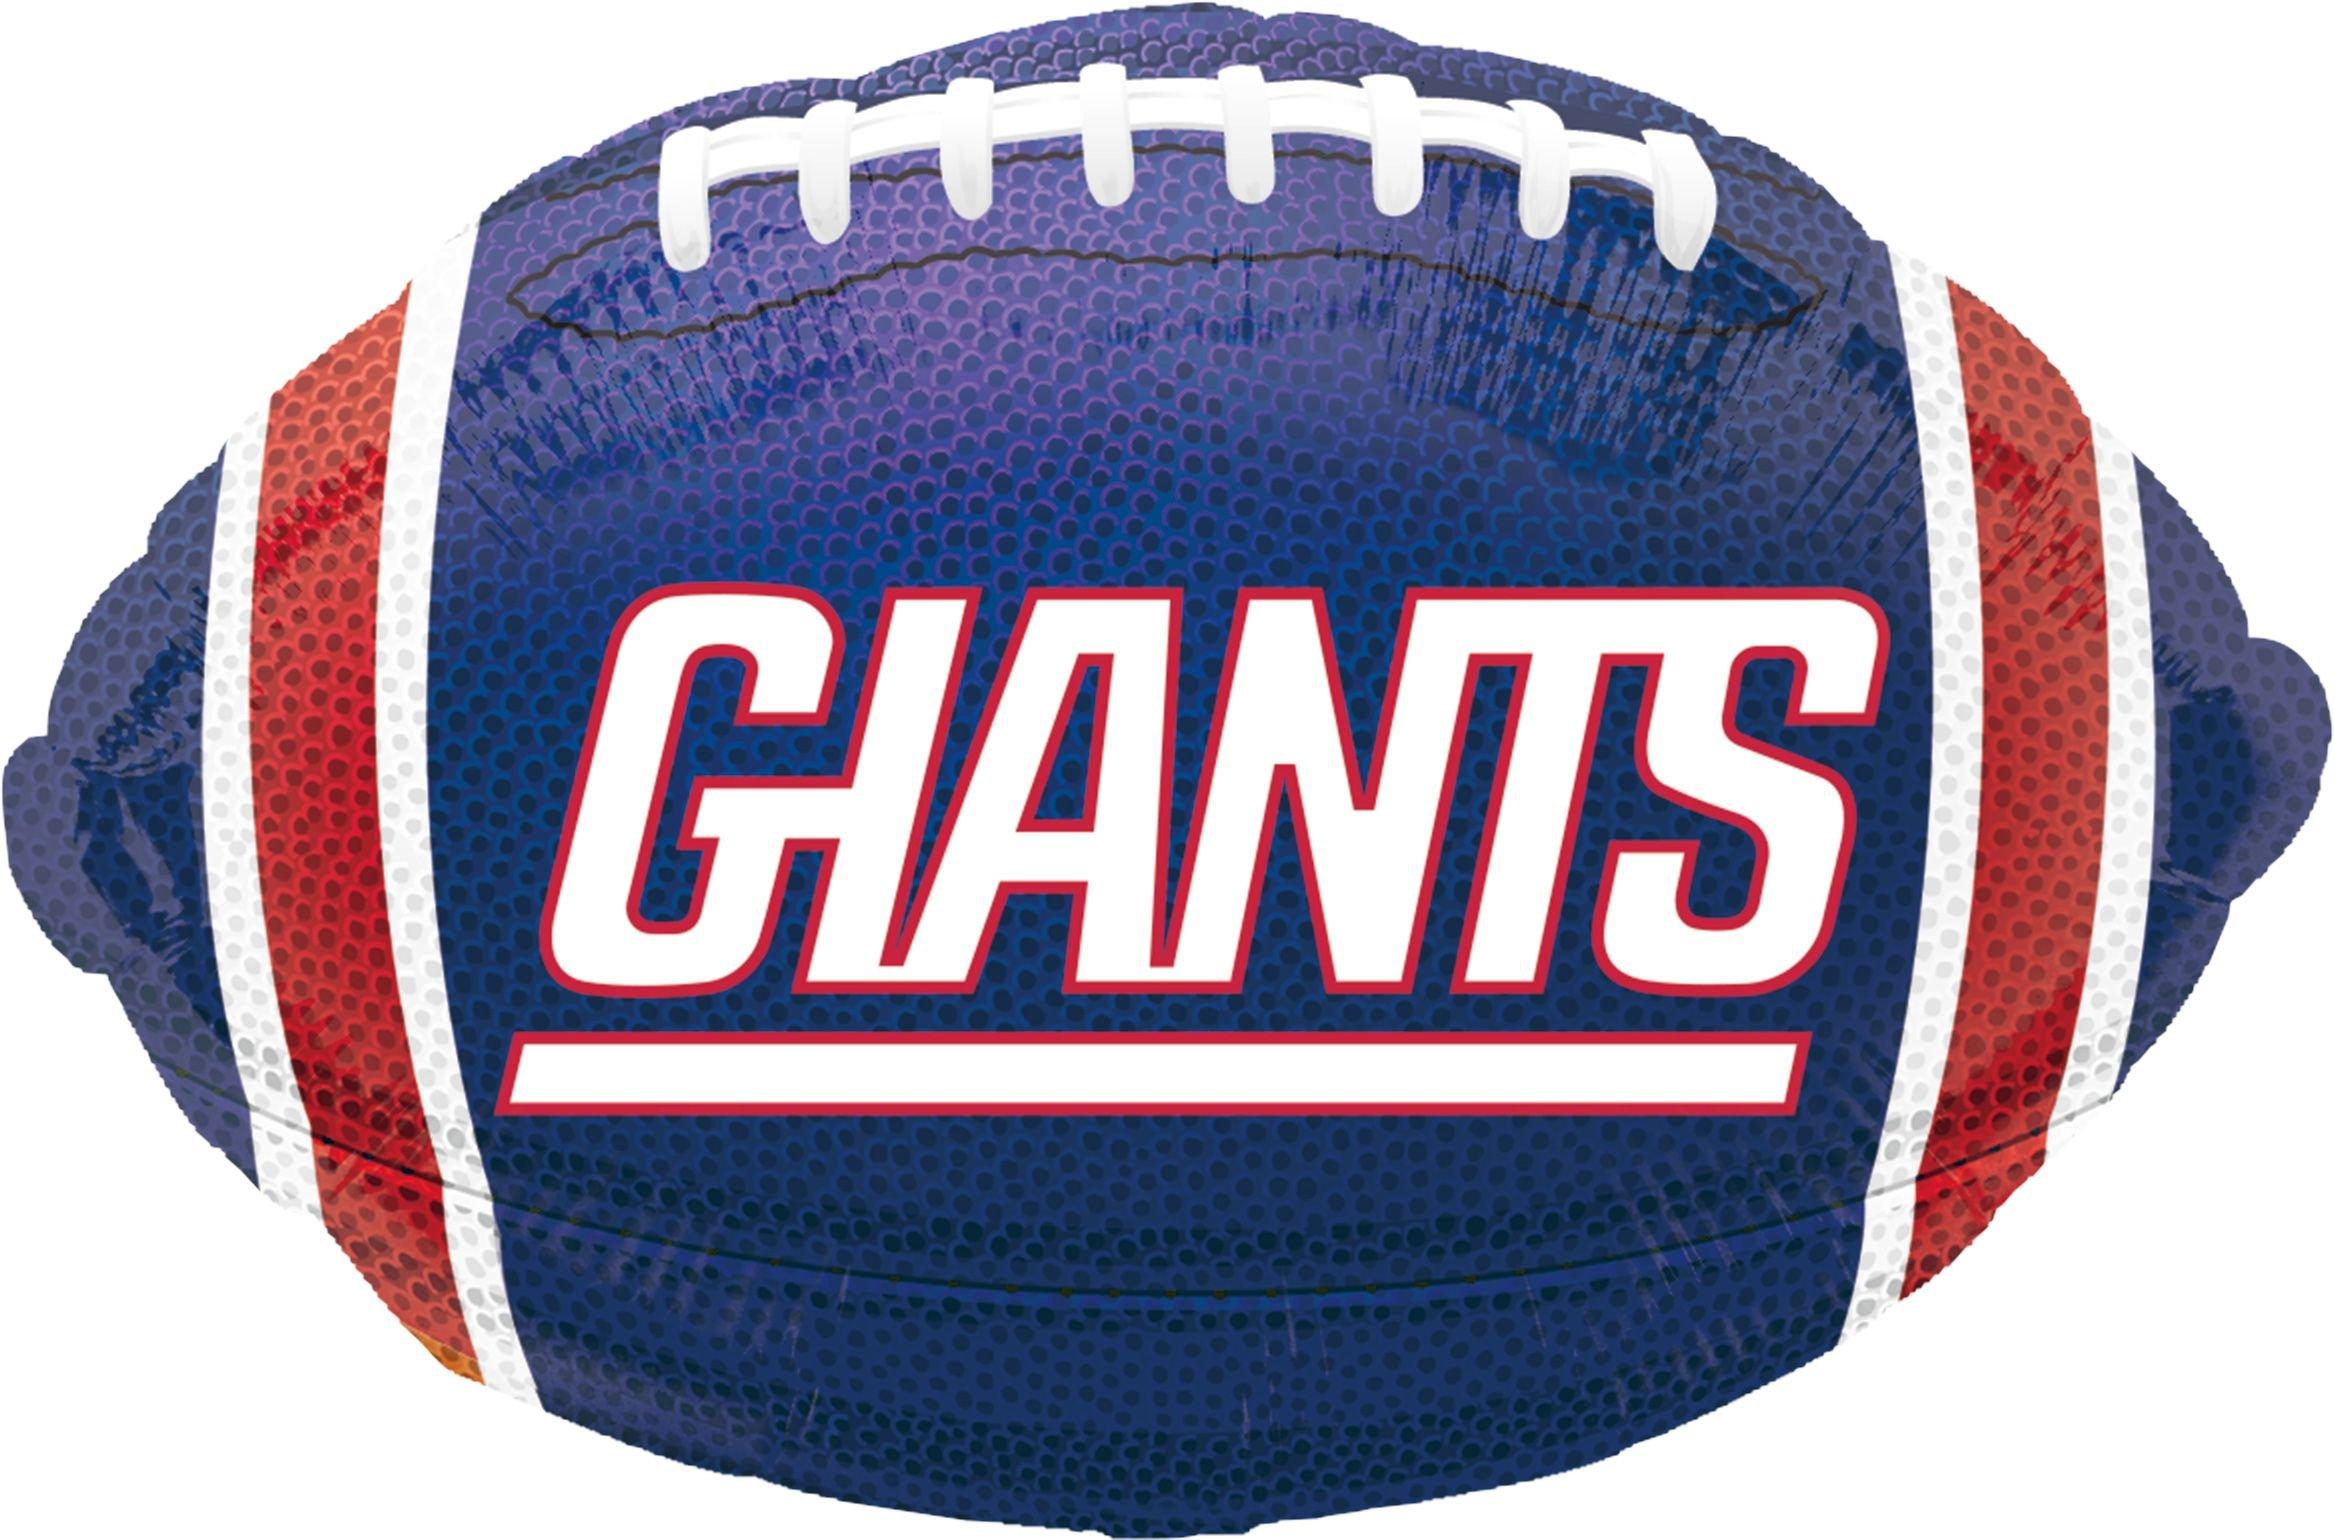 New York Giants 18' Football Balloon